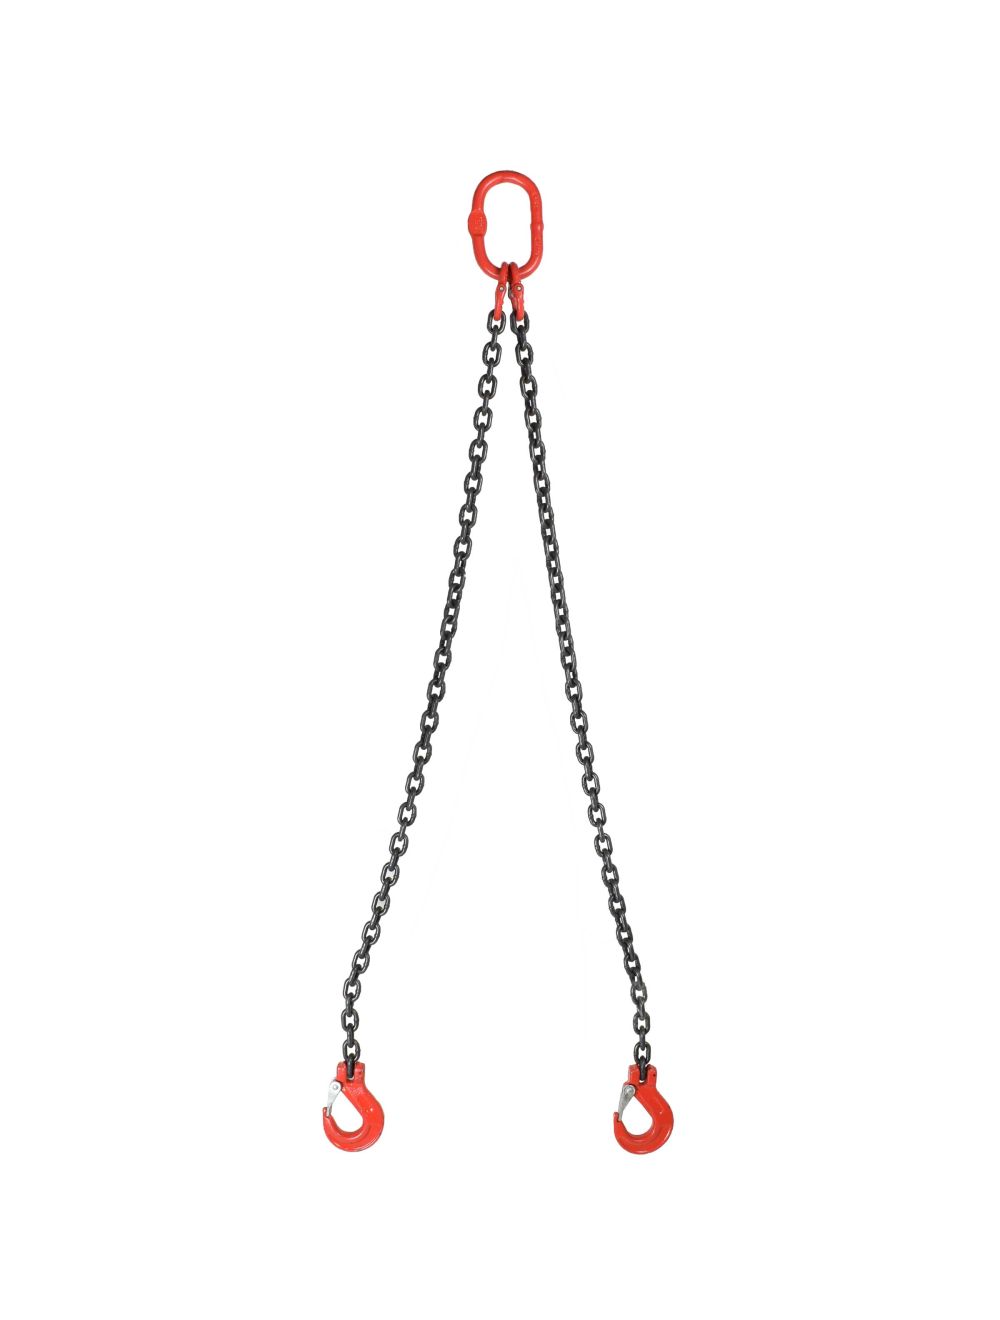 Grade 80 5/8 x 10 Single Leg with Sling Hooks Chain Sling 